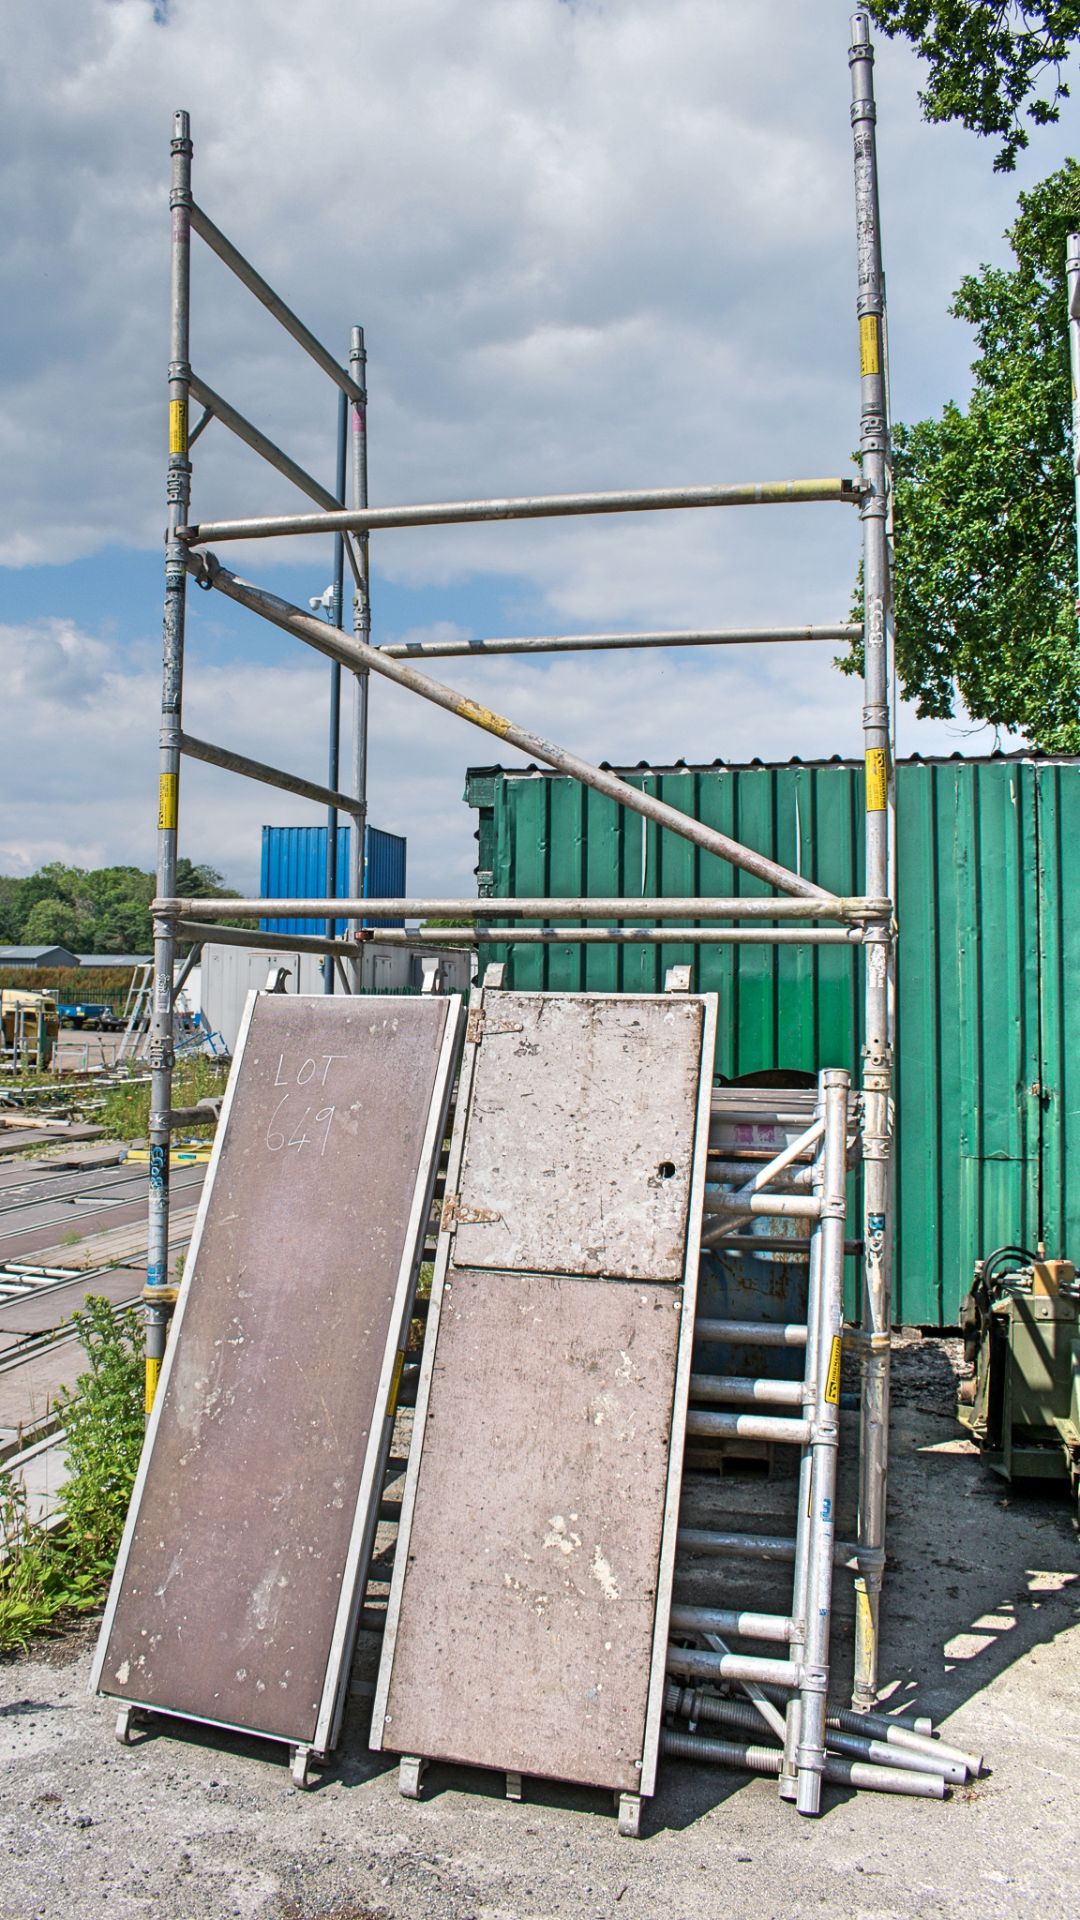 Boss aluminium scaffold tower as photographed